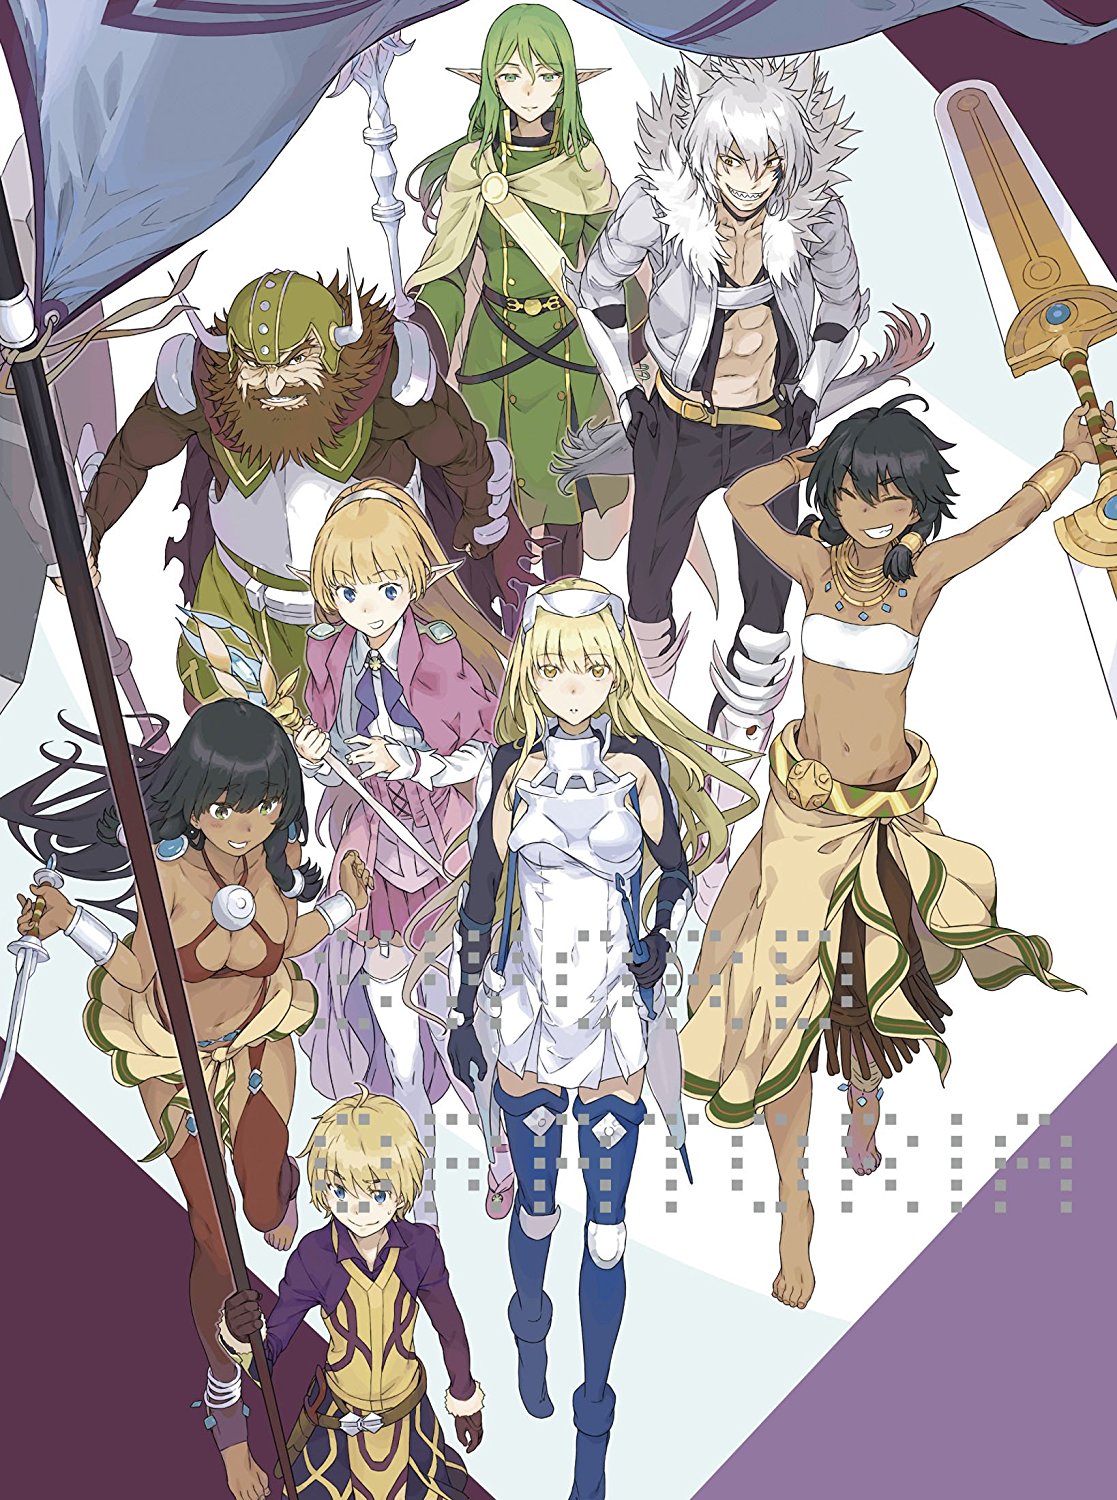 DanMachi: Sword Oratoria Cast, Staff, New Visual Unveiled - Anime